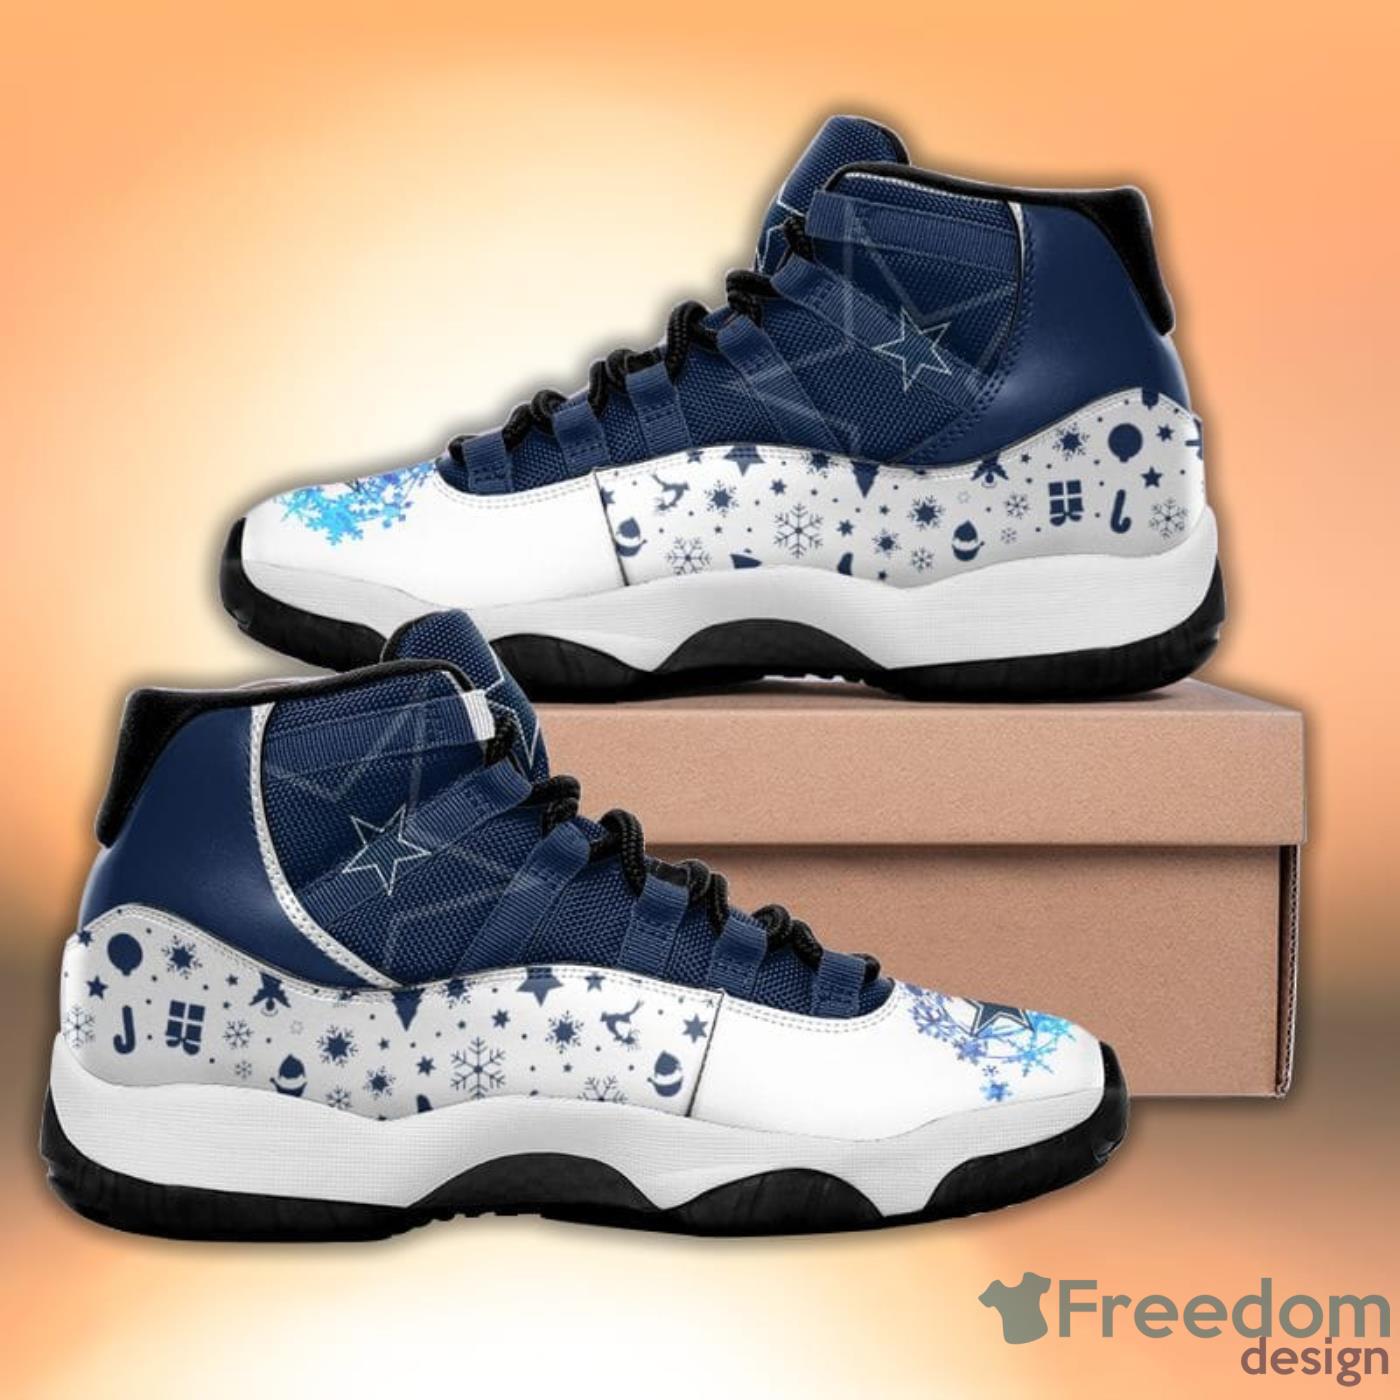 Louis Vuitton Basketball Air Jordan 11 Shoes